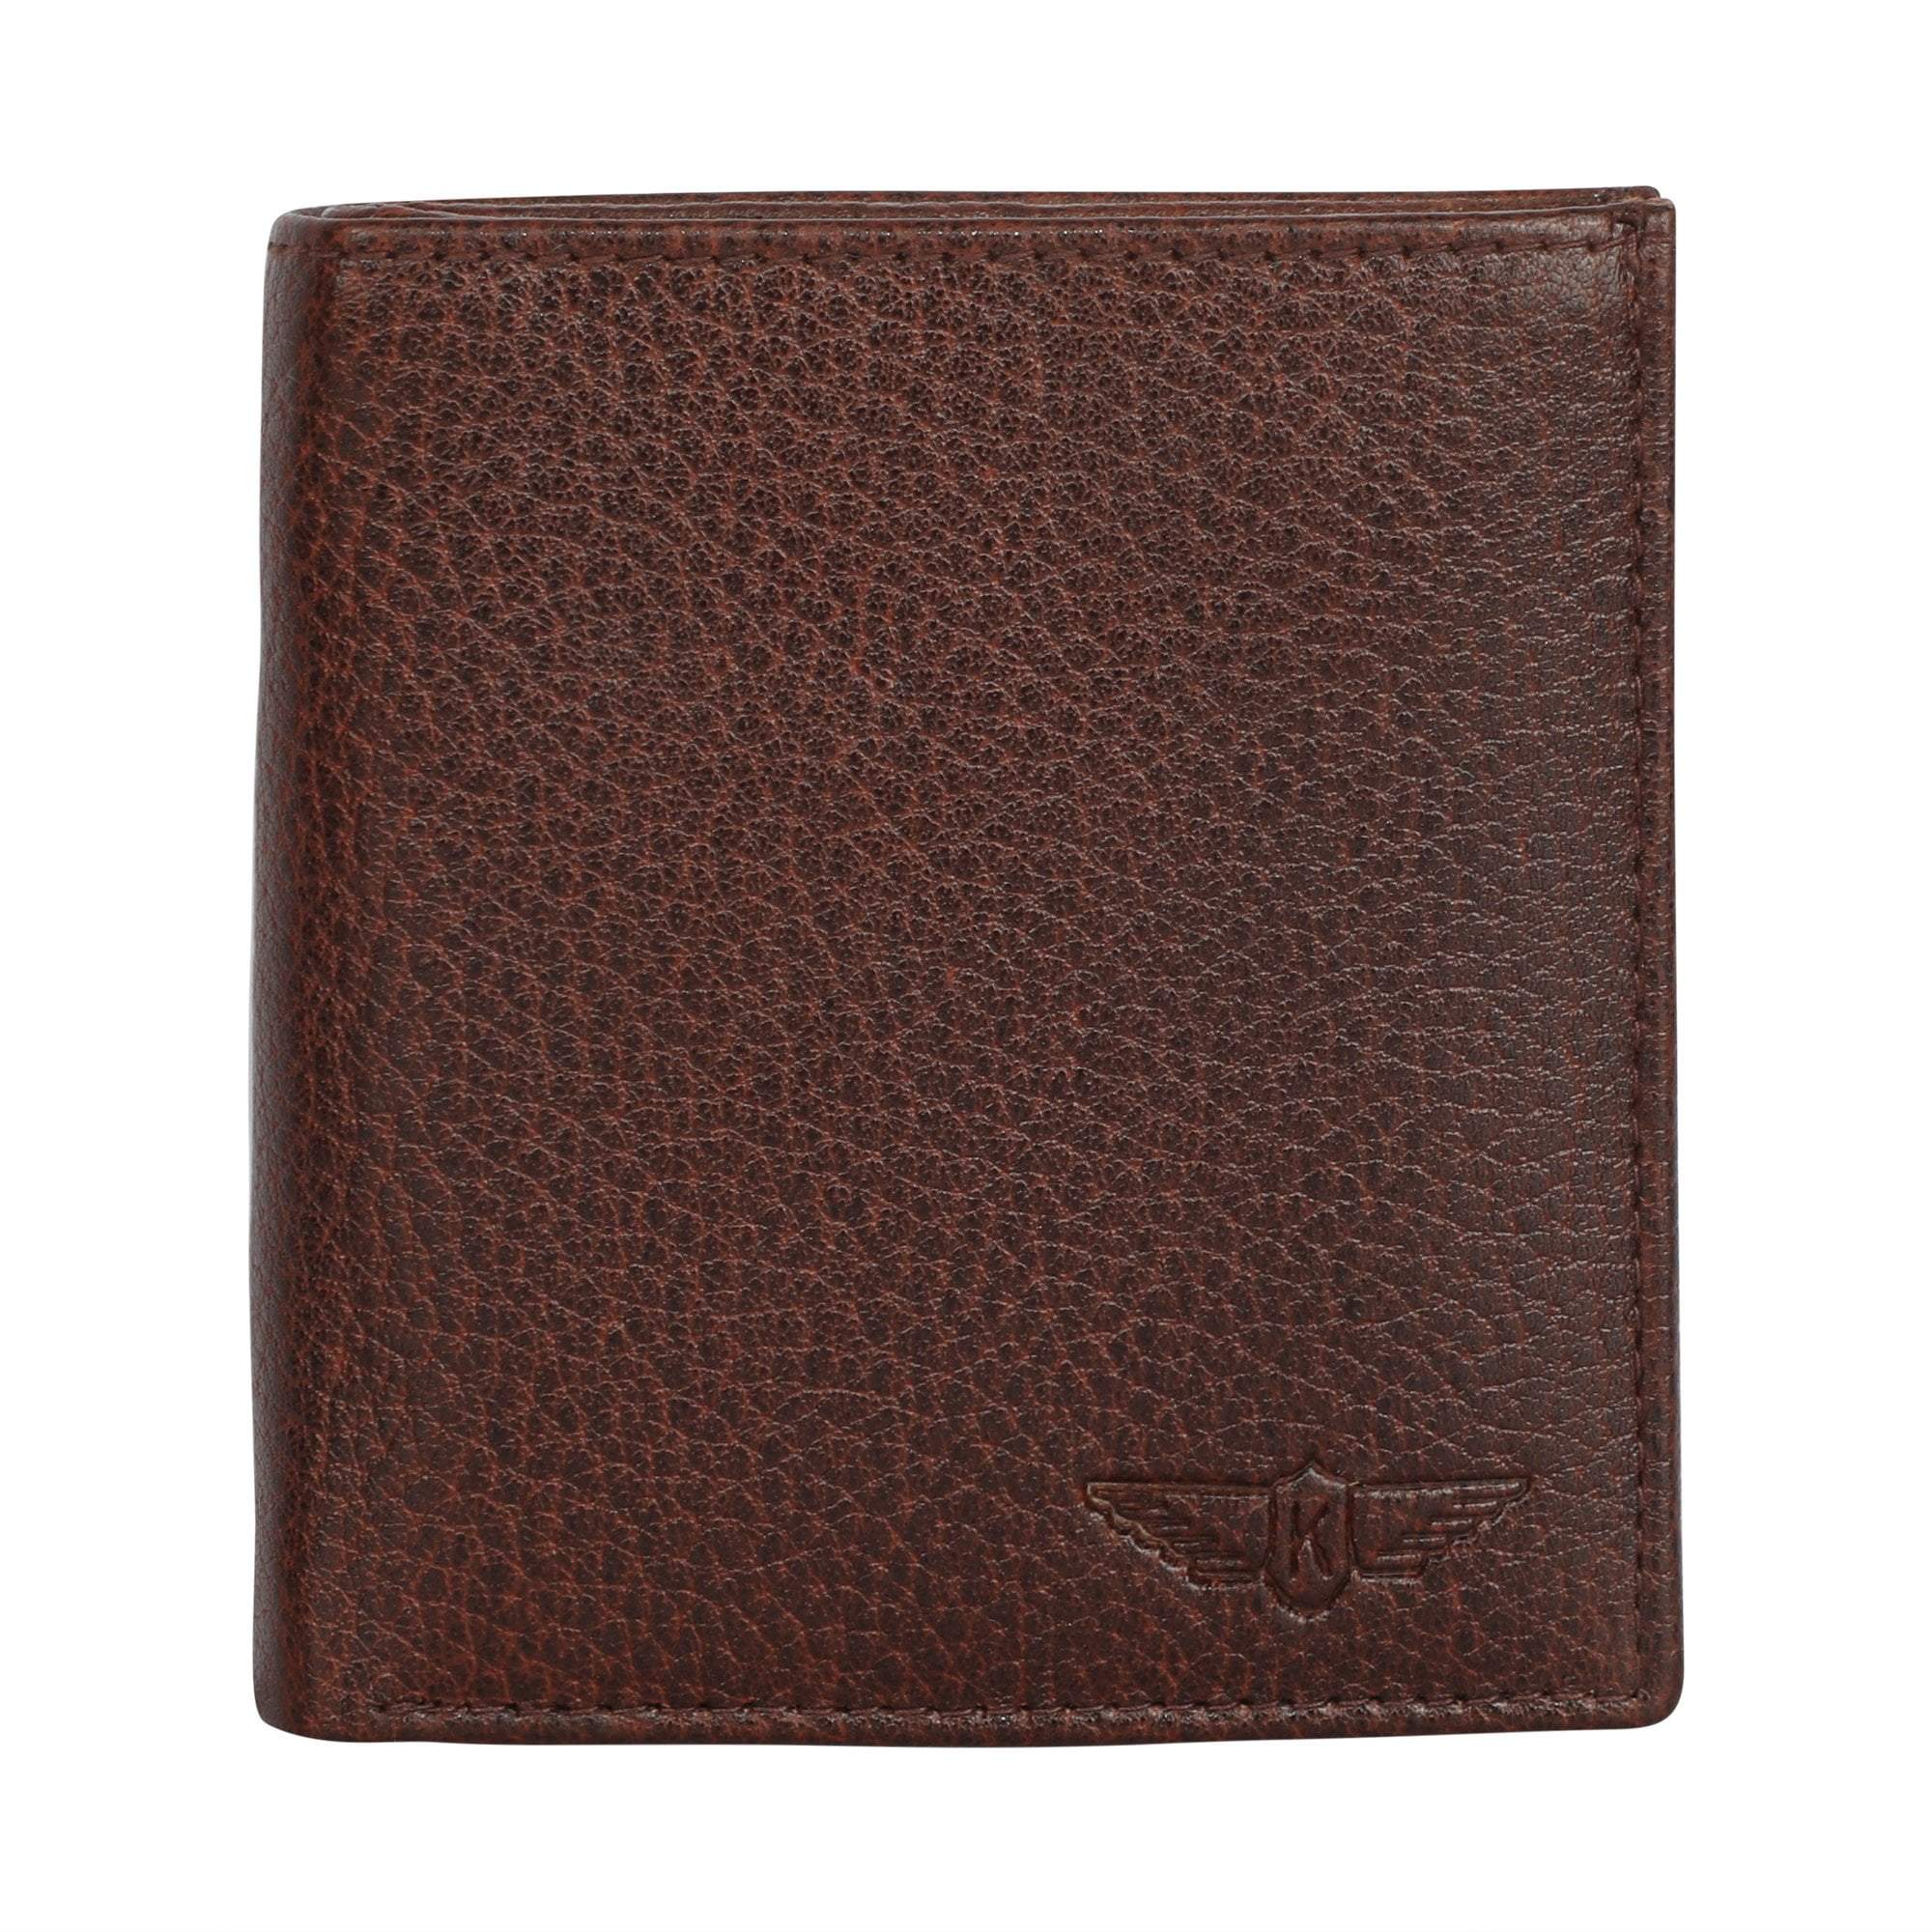 kinnoti Wallets 100% Genuine Leather Wallet (Brown)